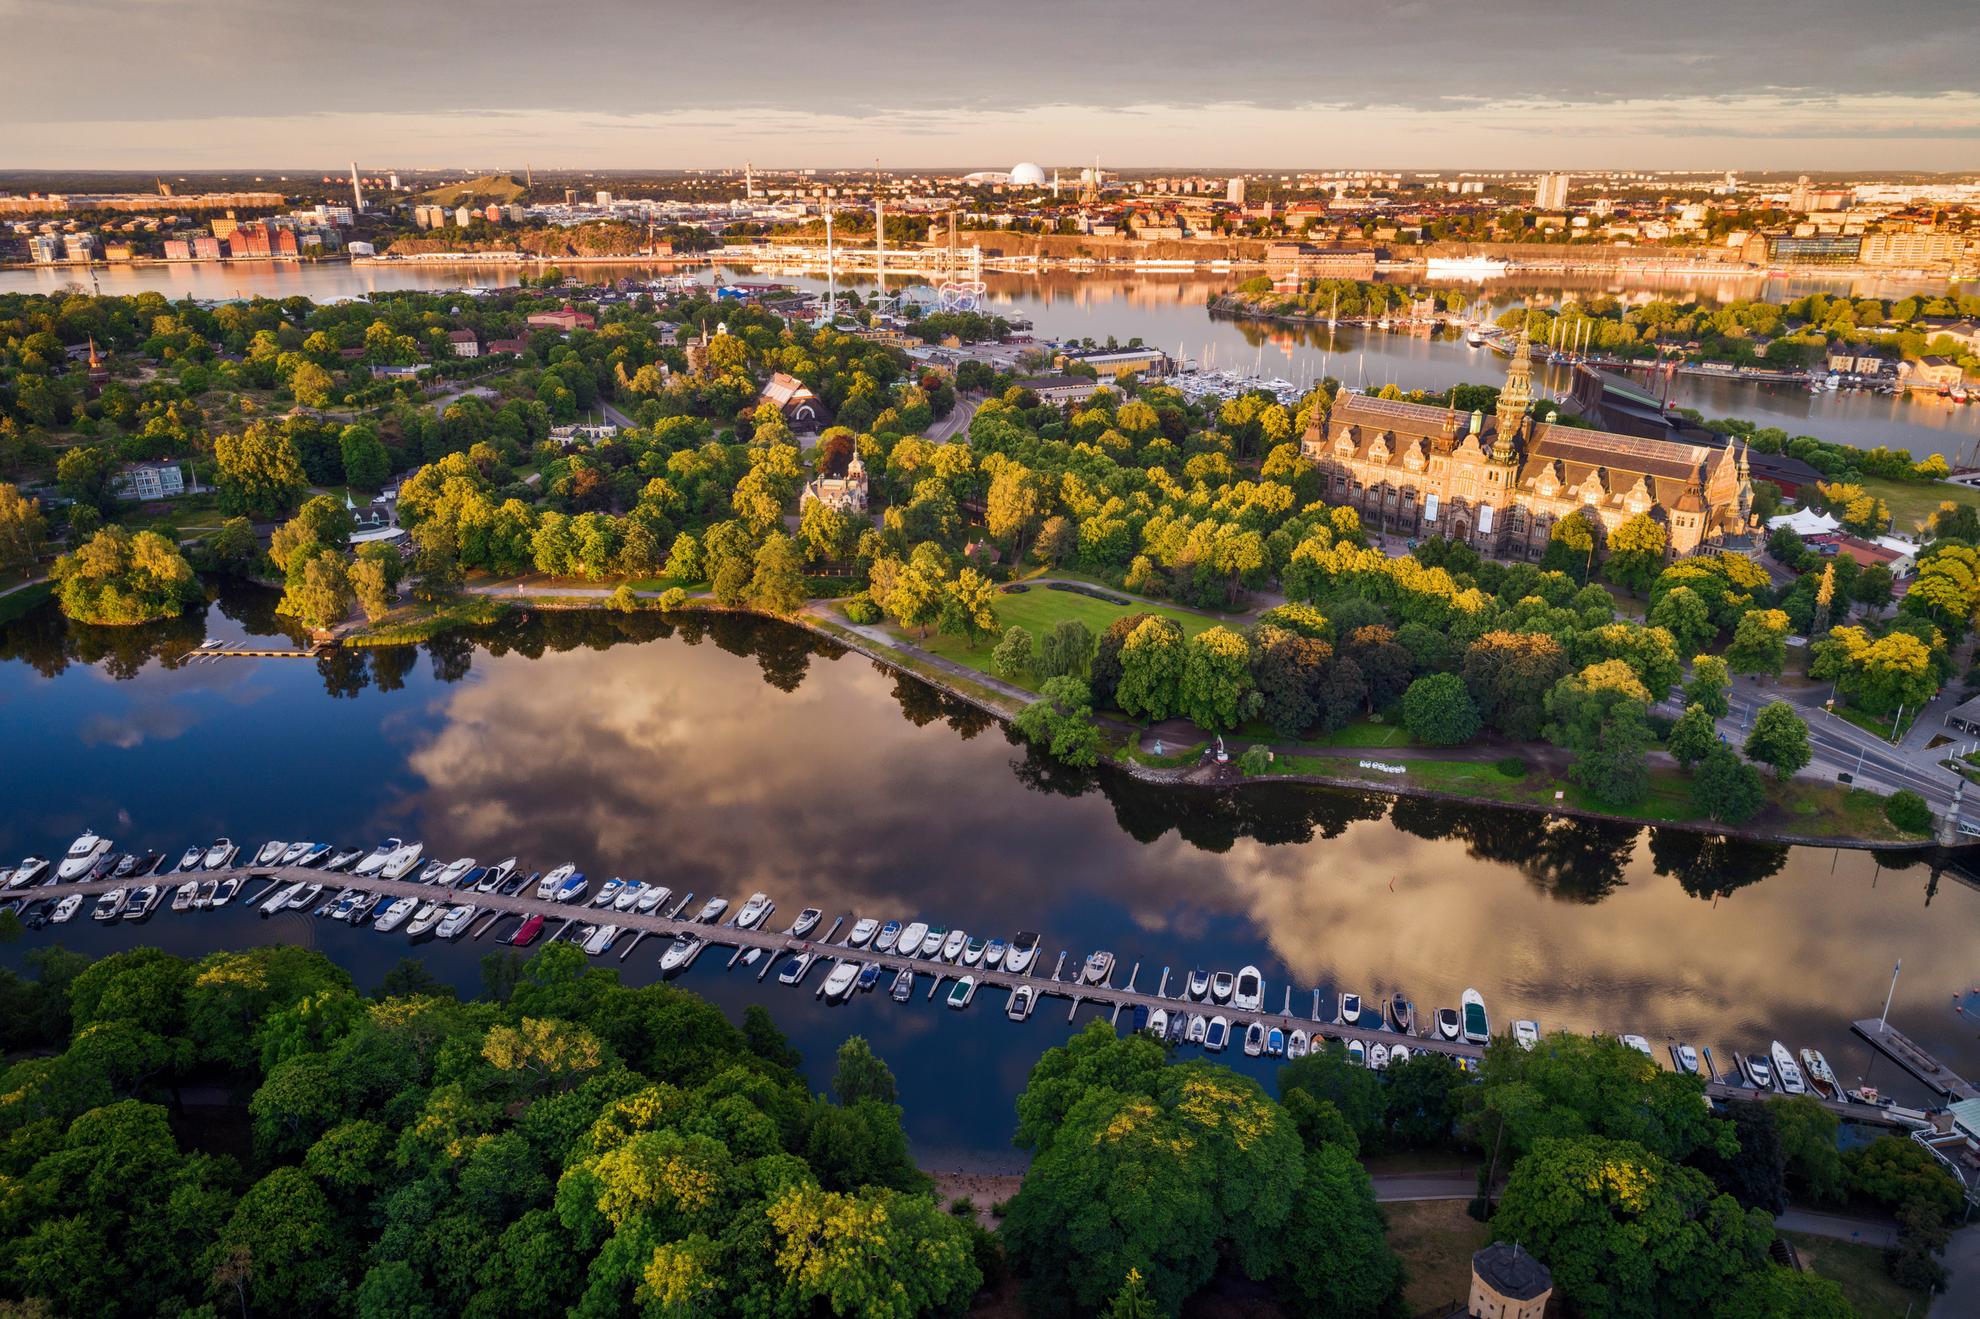 A drone image of the Royal Djurgården in Stockholm.